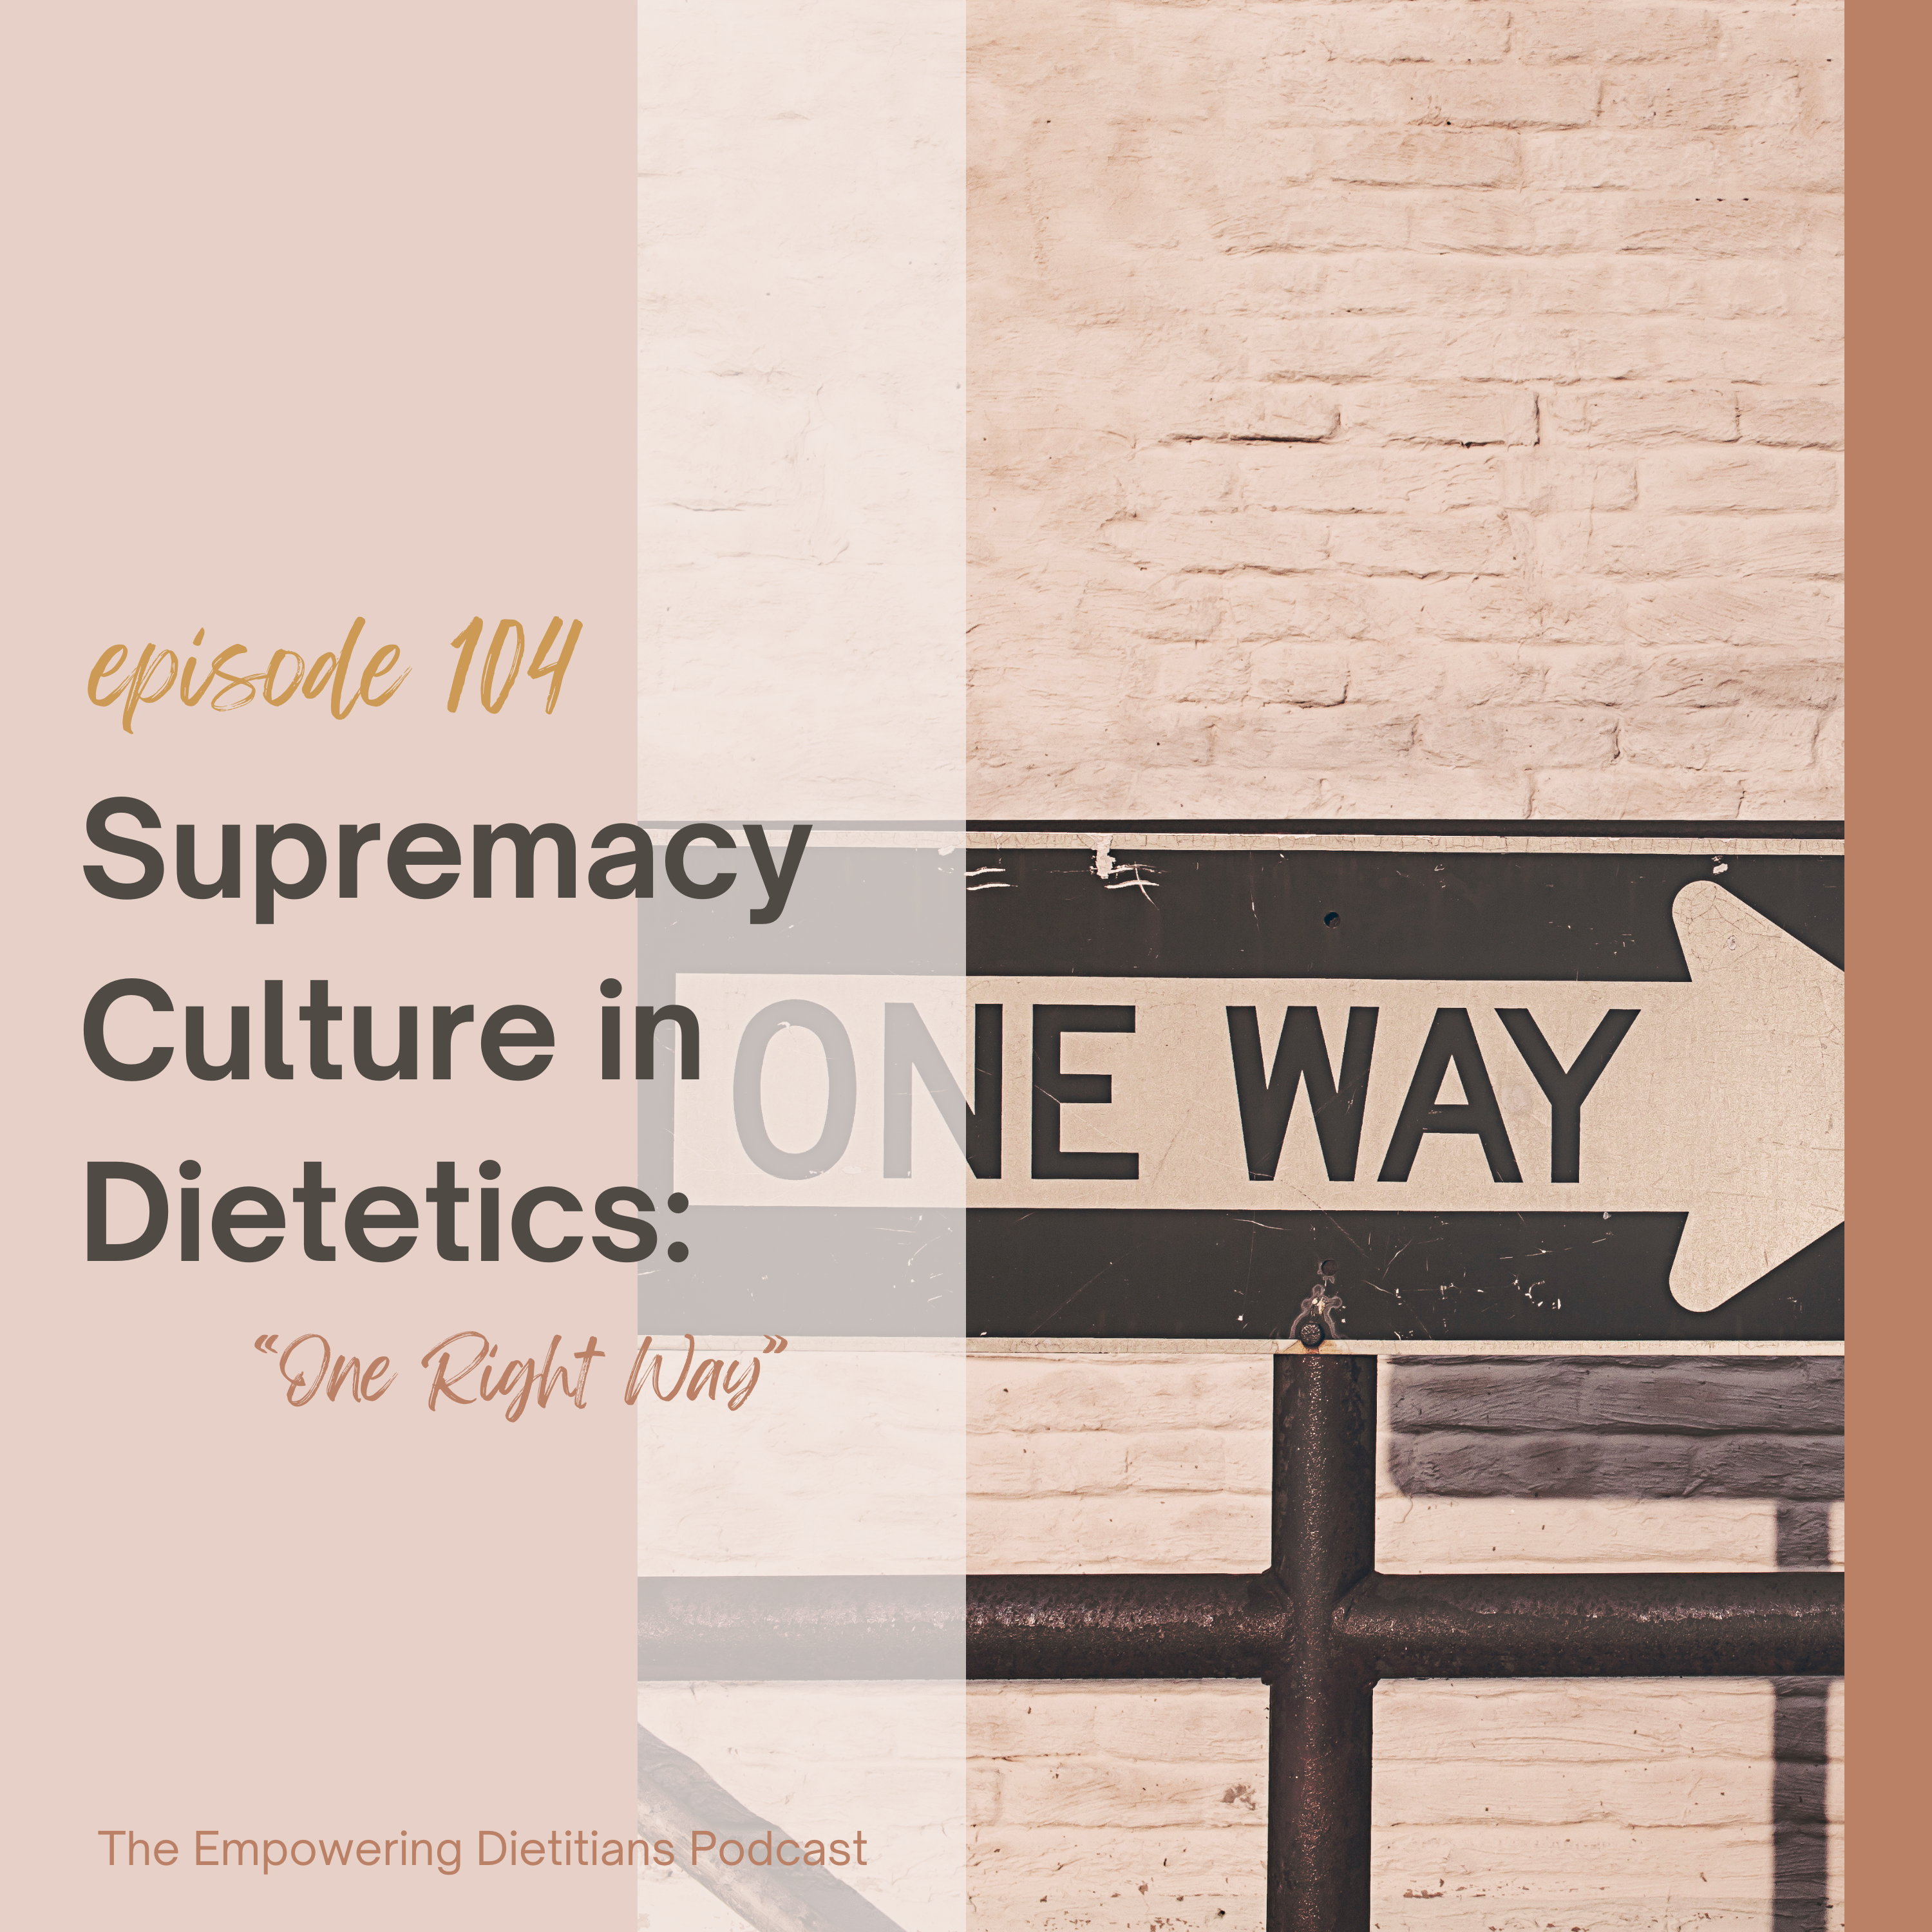 supremacy culture in dietetics - one right way